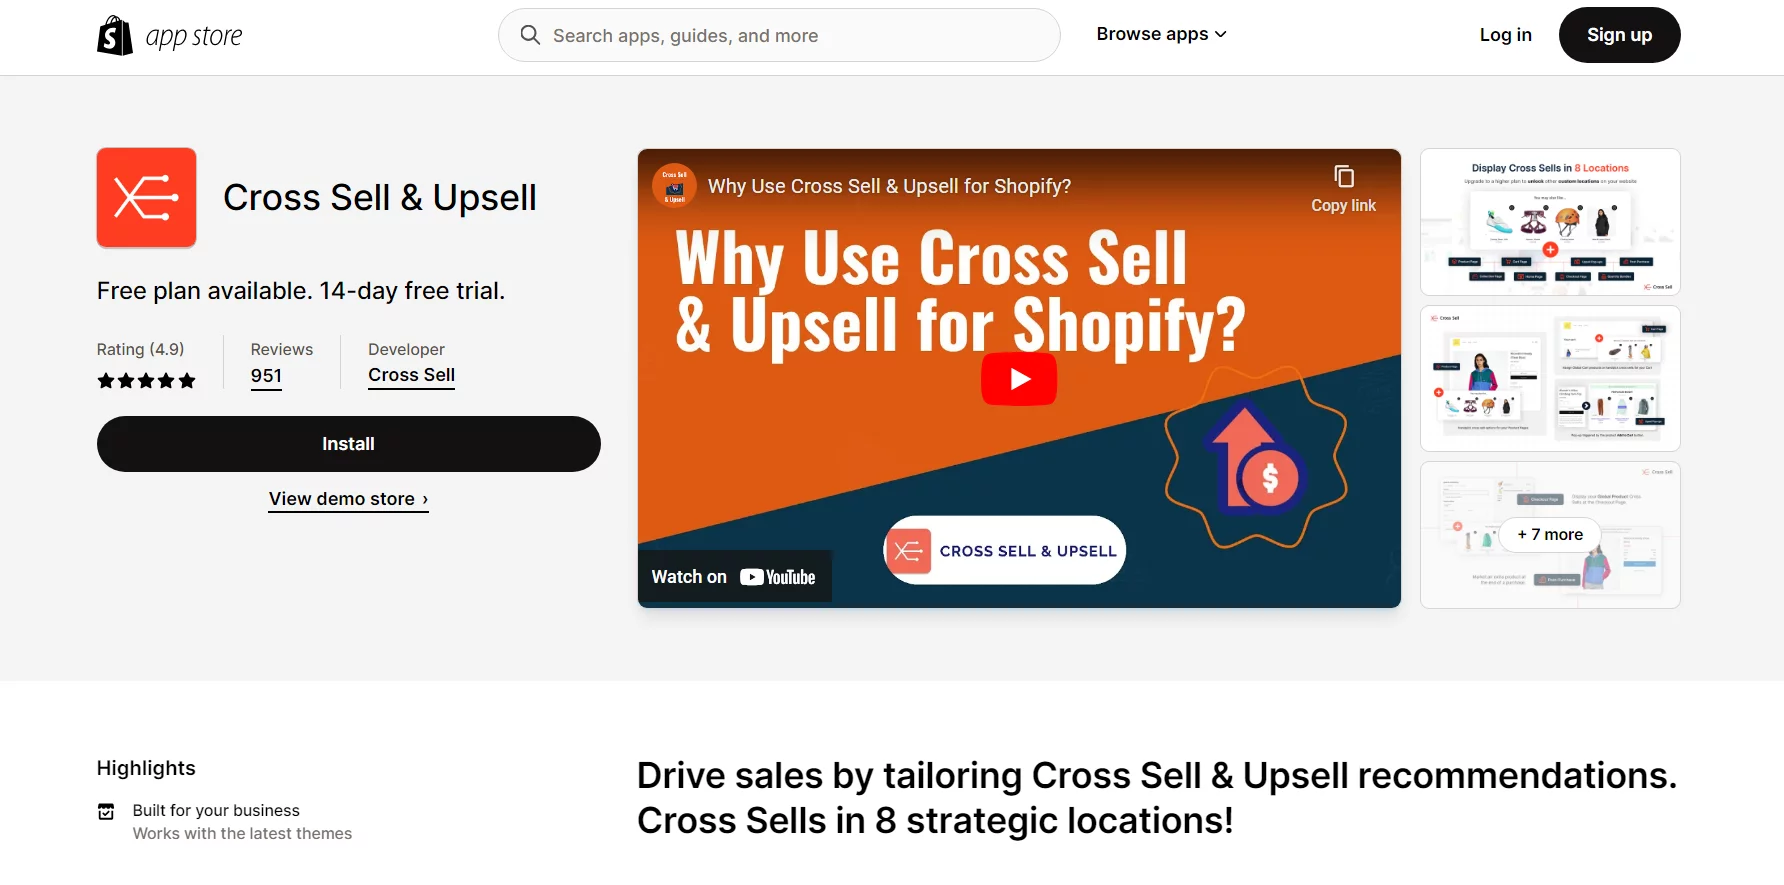 Cross Sell & Upsell